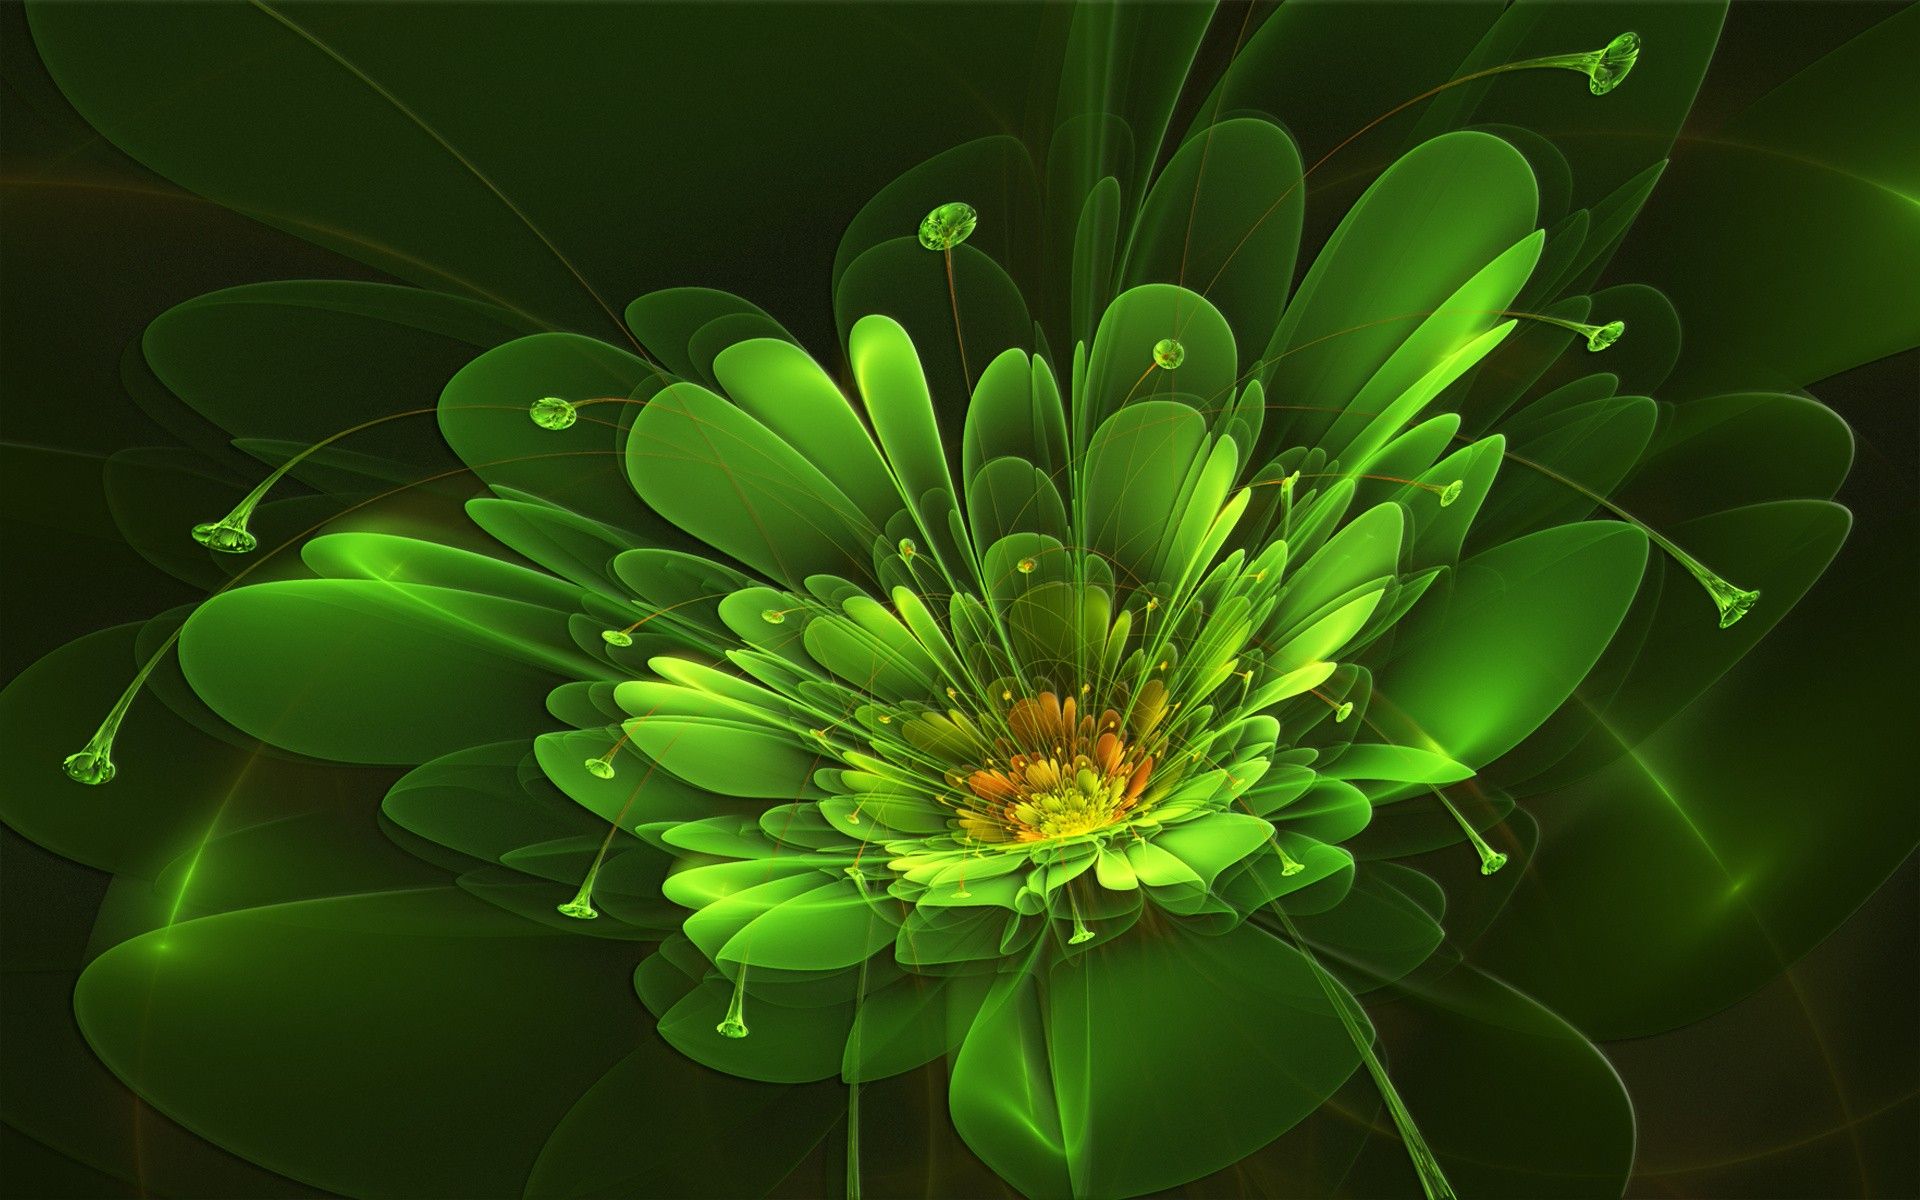 Abstract wallpaper green HD. Flor verde. | Colores | Pinterest | Hd ...